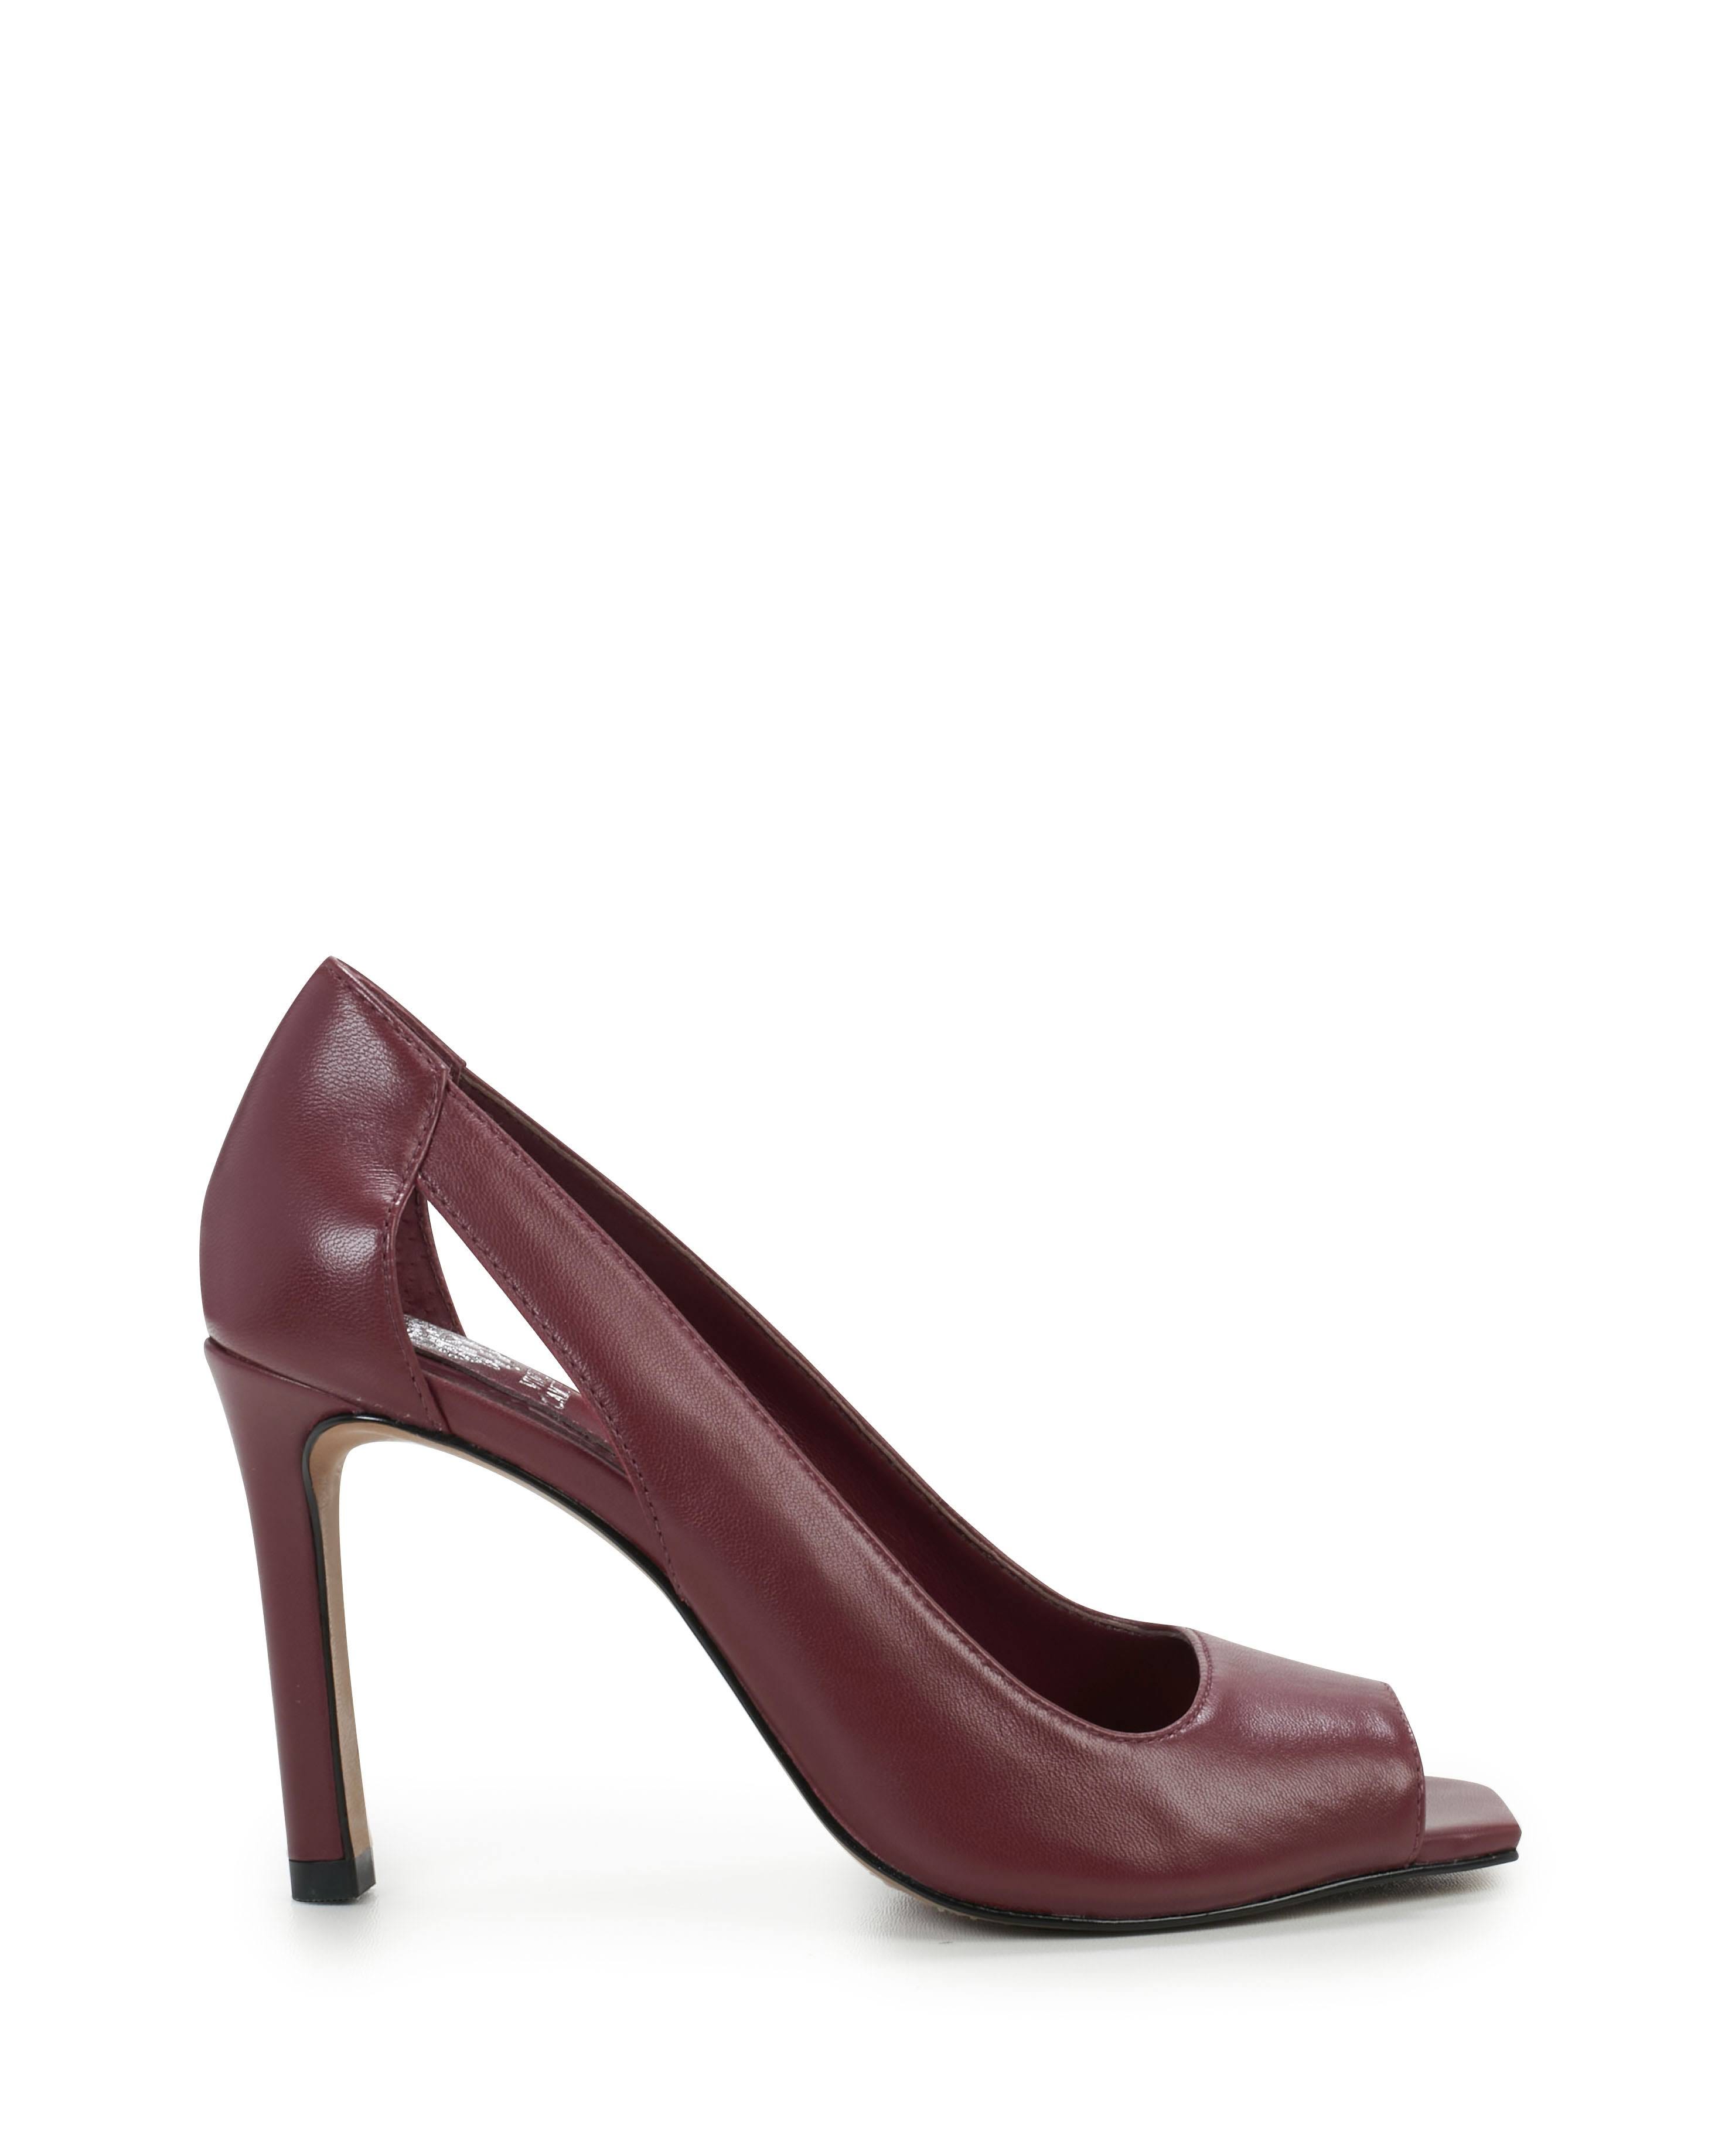 Vince Camuto Lizanie Pump: Elegant Red Heels in Size 5 | Image